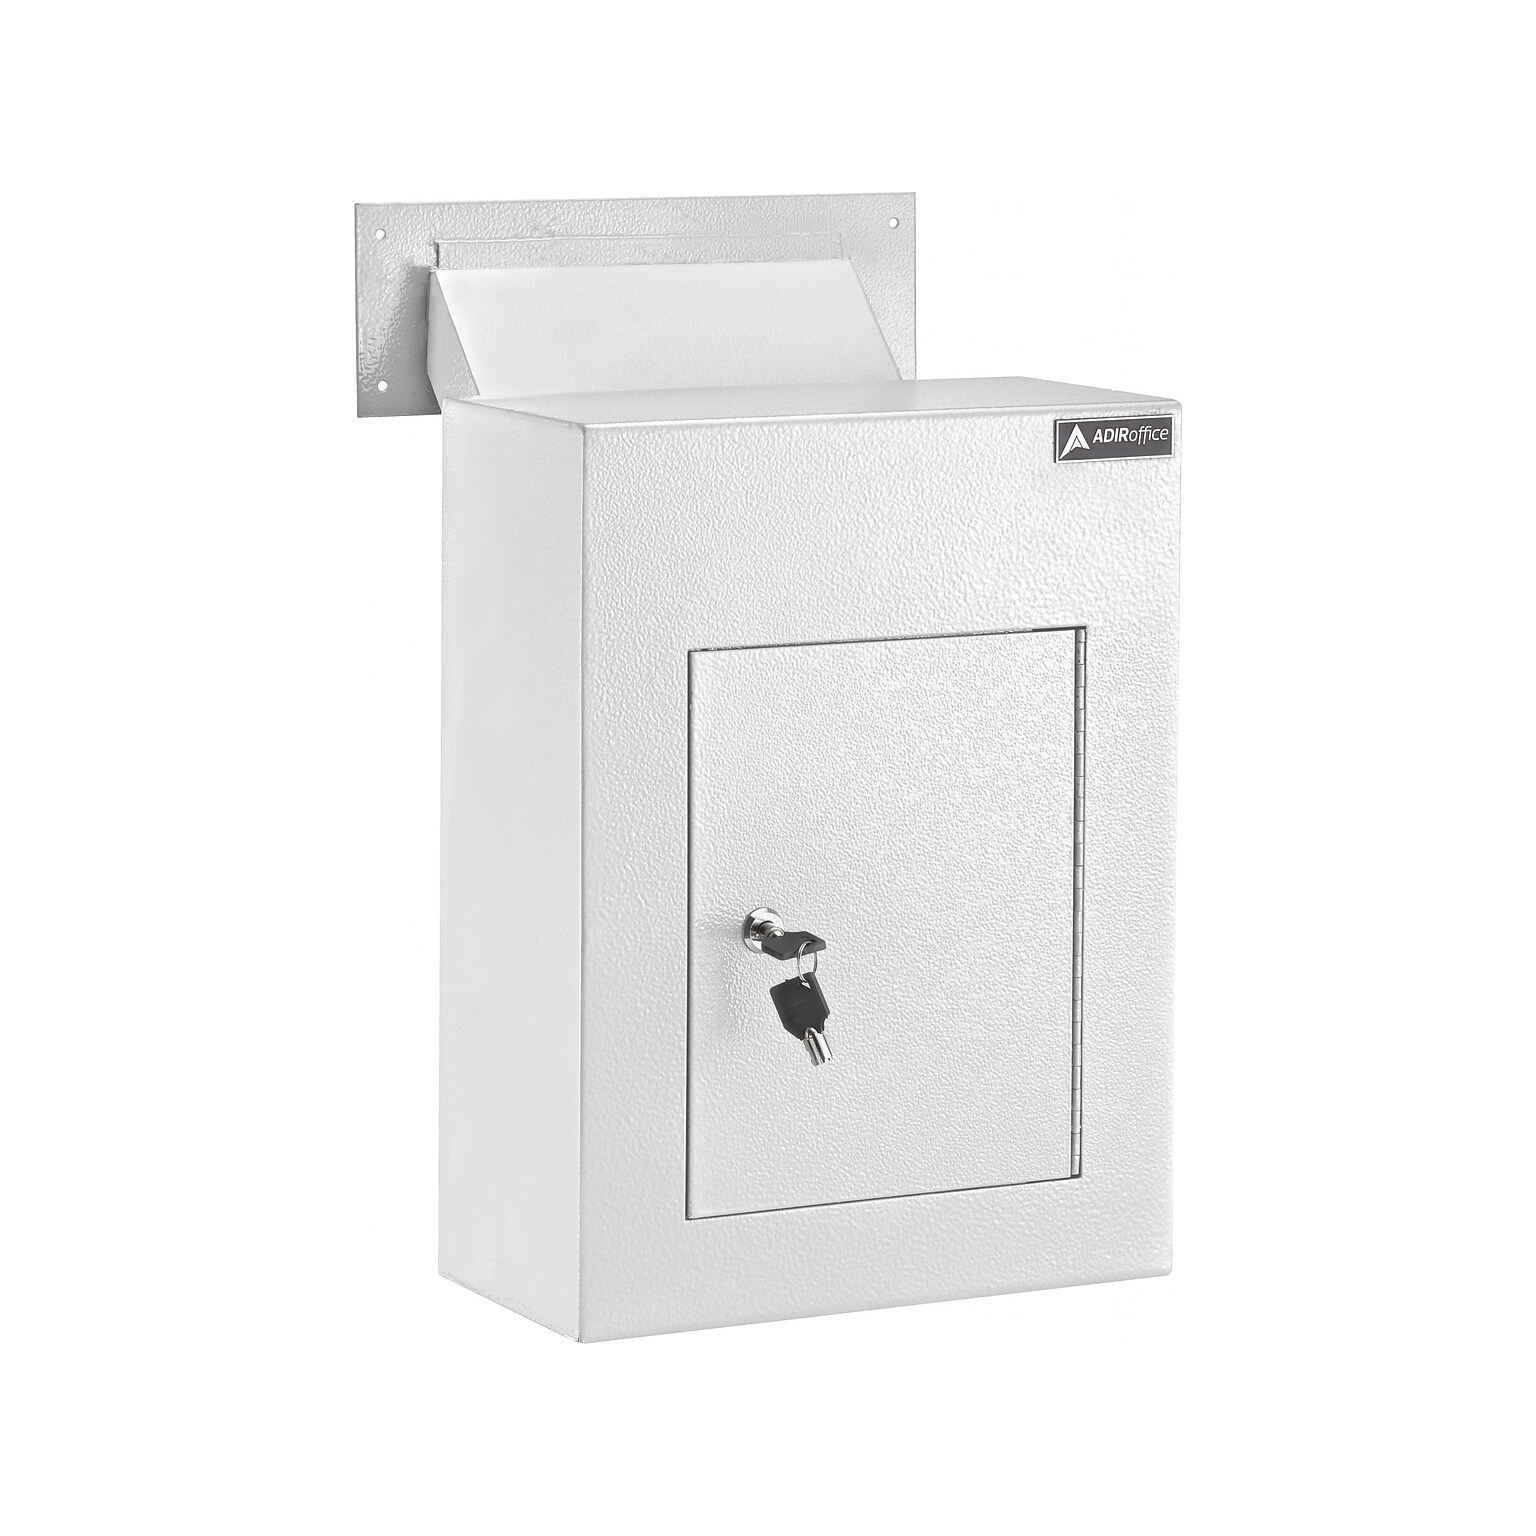 AdirOffice Large Wall Mounted Drop Box, White (631-10-WHI)